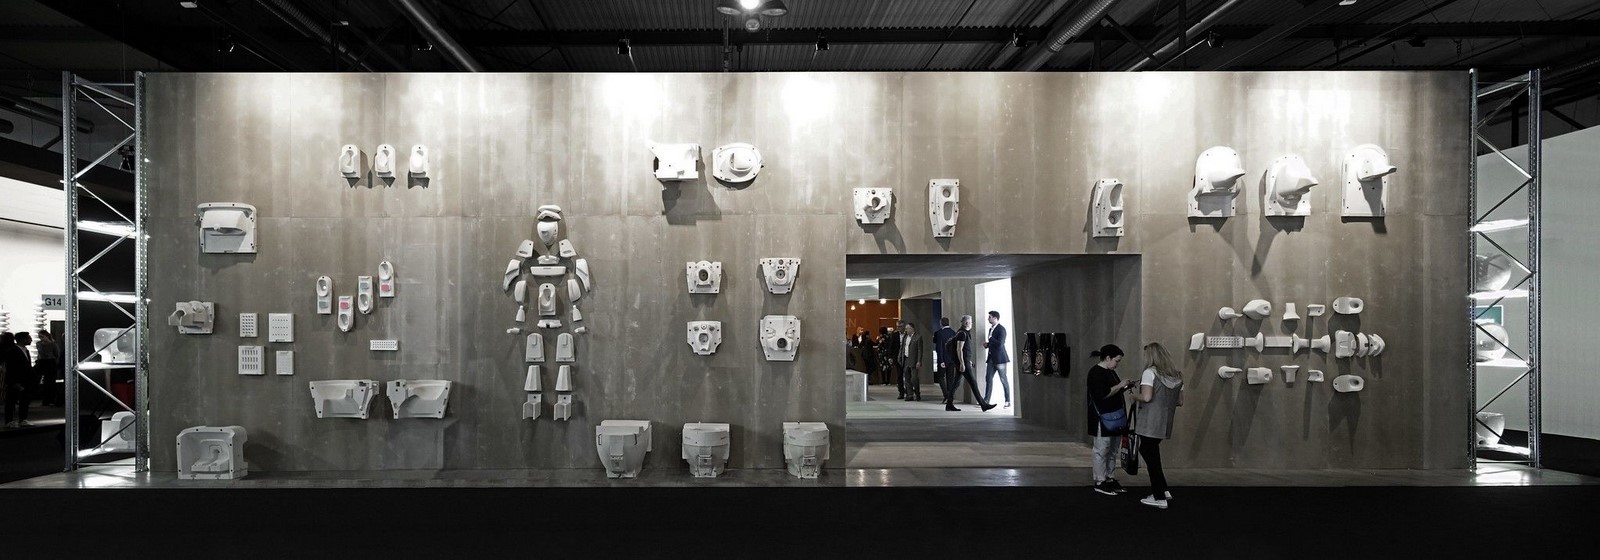 Showroom Laufen Bathrooms at Salone del Mobile, Milano, 2018 - Sheet1